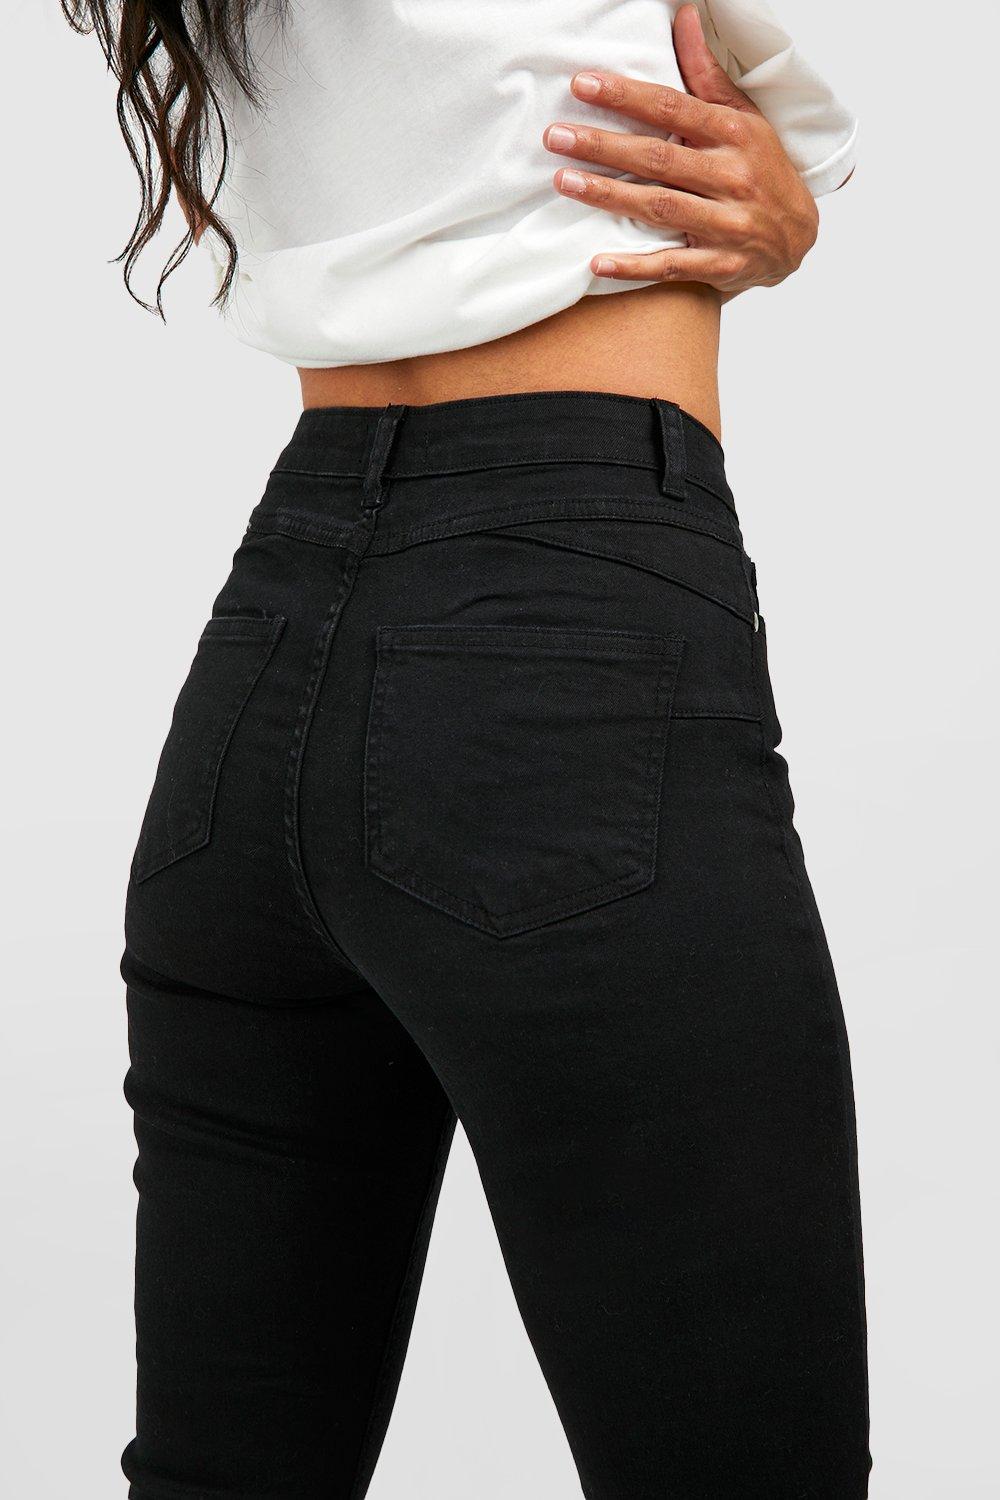 https://media.boohoo.com/i/boohoo/gzz59757_black_xl_3/female-black-butt-shaper-high-rise-skinny-jeans